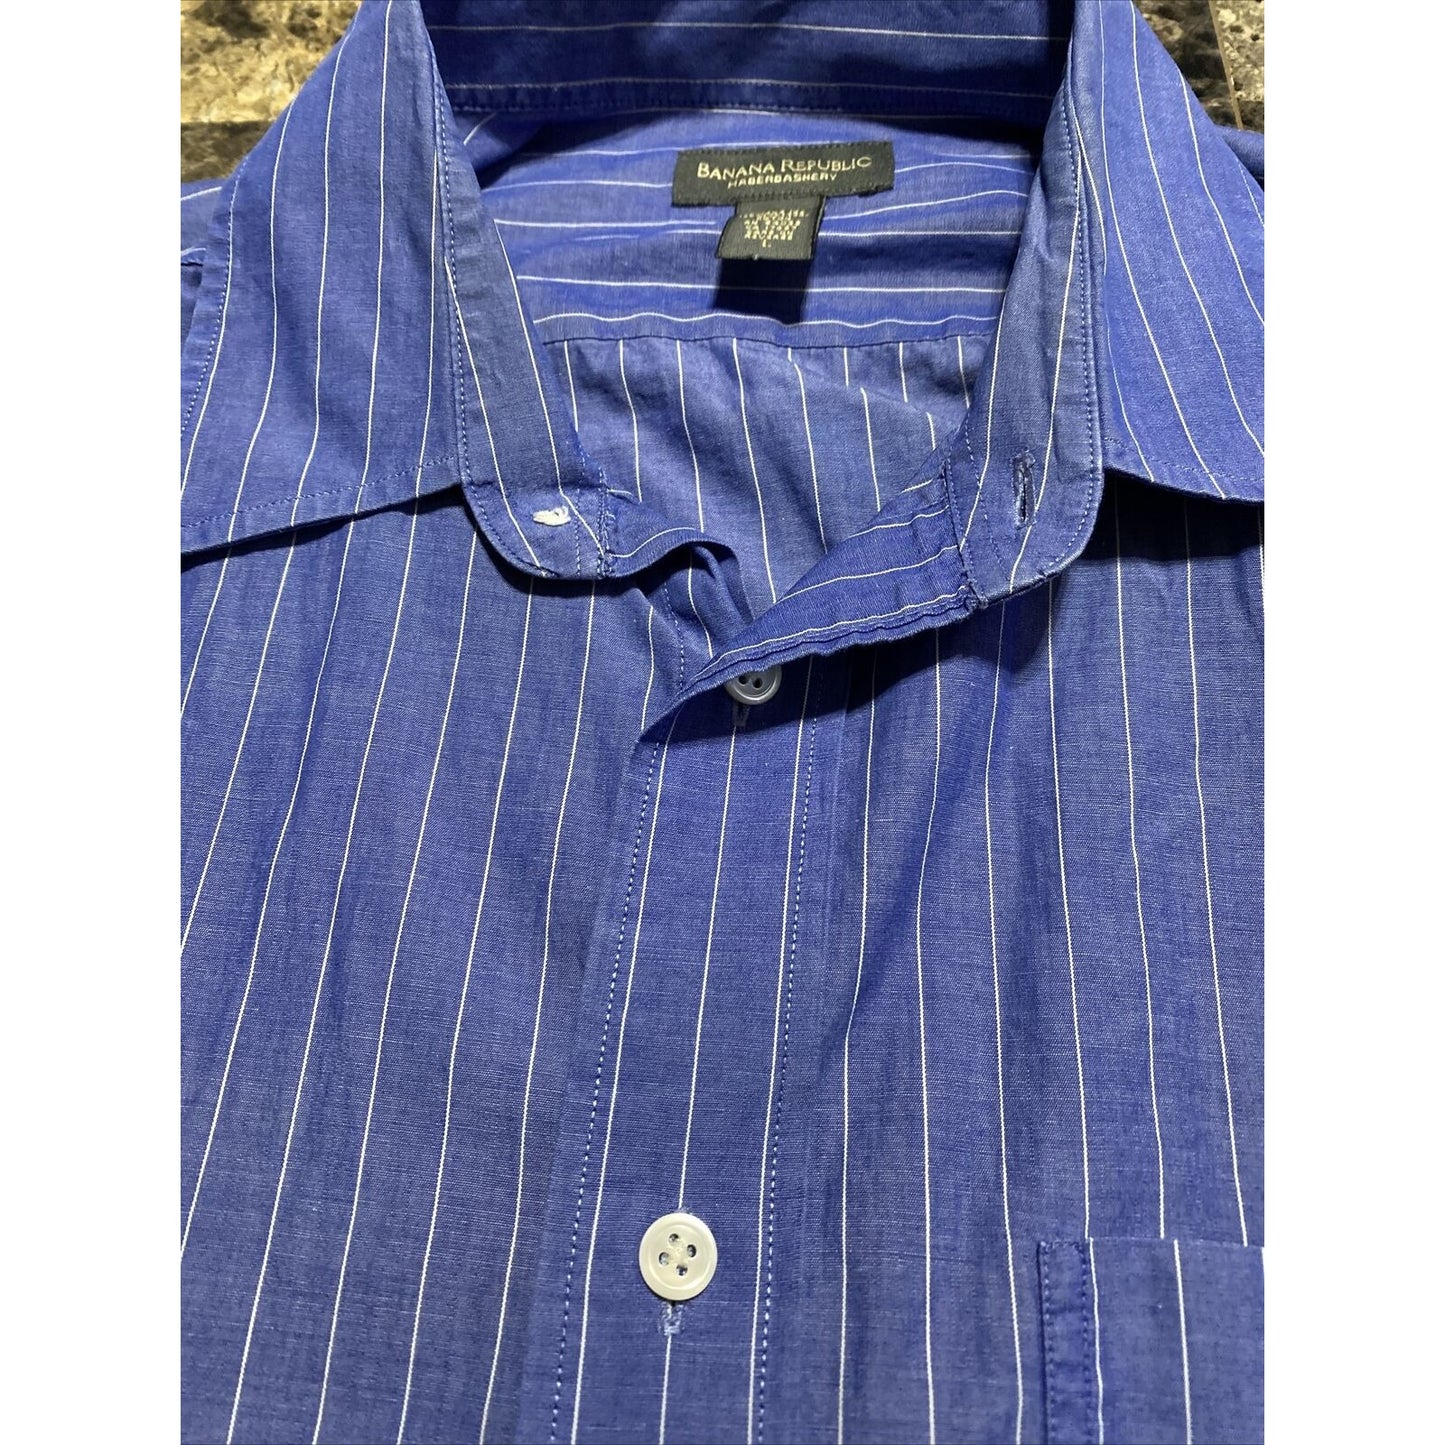 Banana Republic Men’s Large Blue Stripes Button-down Cotton Long Sleeves Shirt